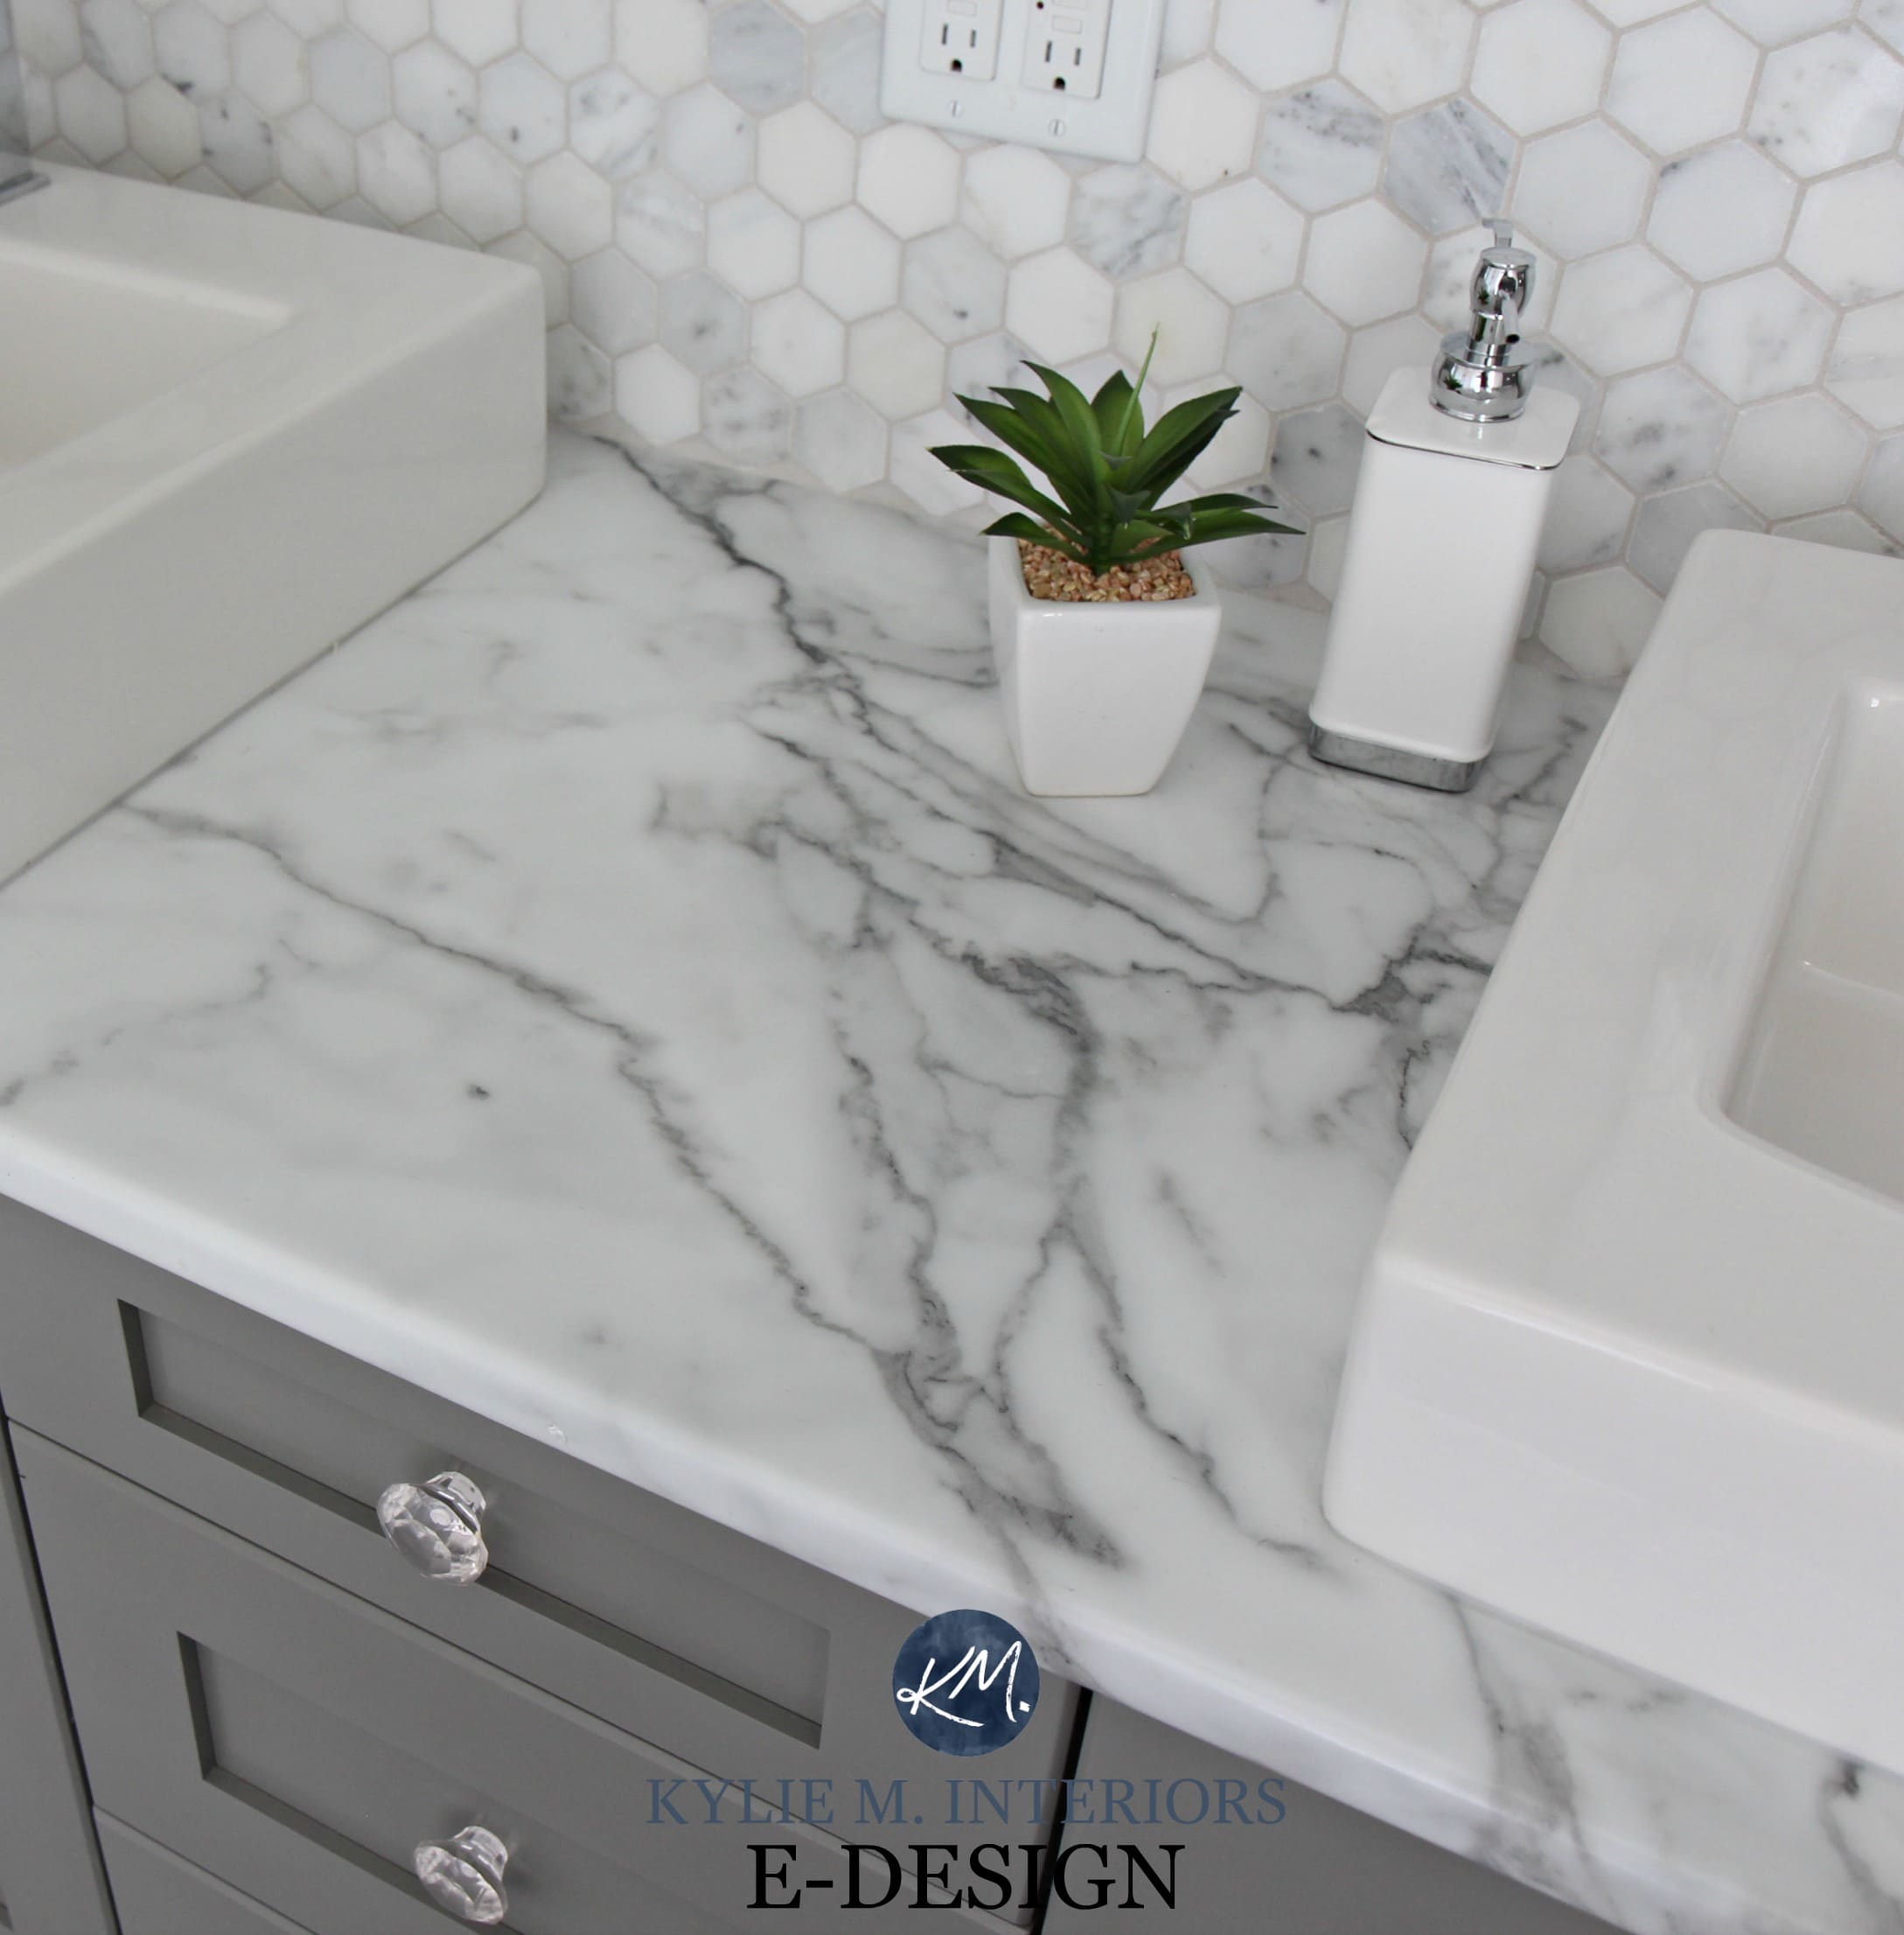 Budget friendly bathroom update ideas, formica calacatta marble laminate countertops, hexagon tile backsplash. Chelsea Gray vanity. Kylie M E-design